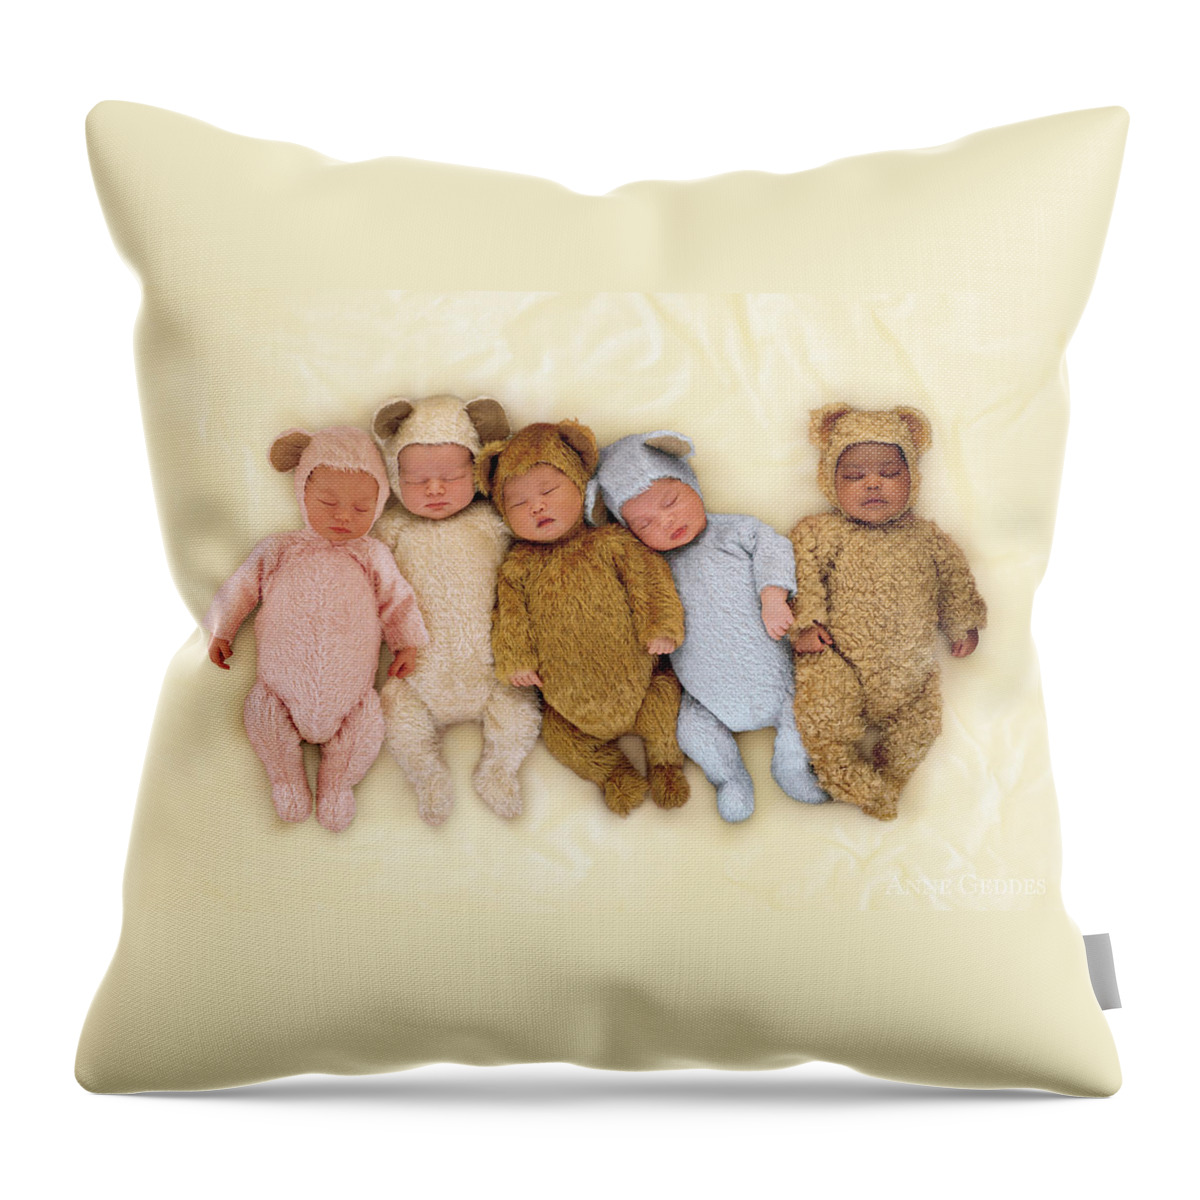 Teddy Bears Throw Pillow featuring the photograph Sleepy Bears by Anne Geddes